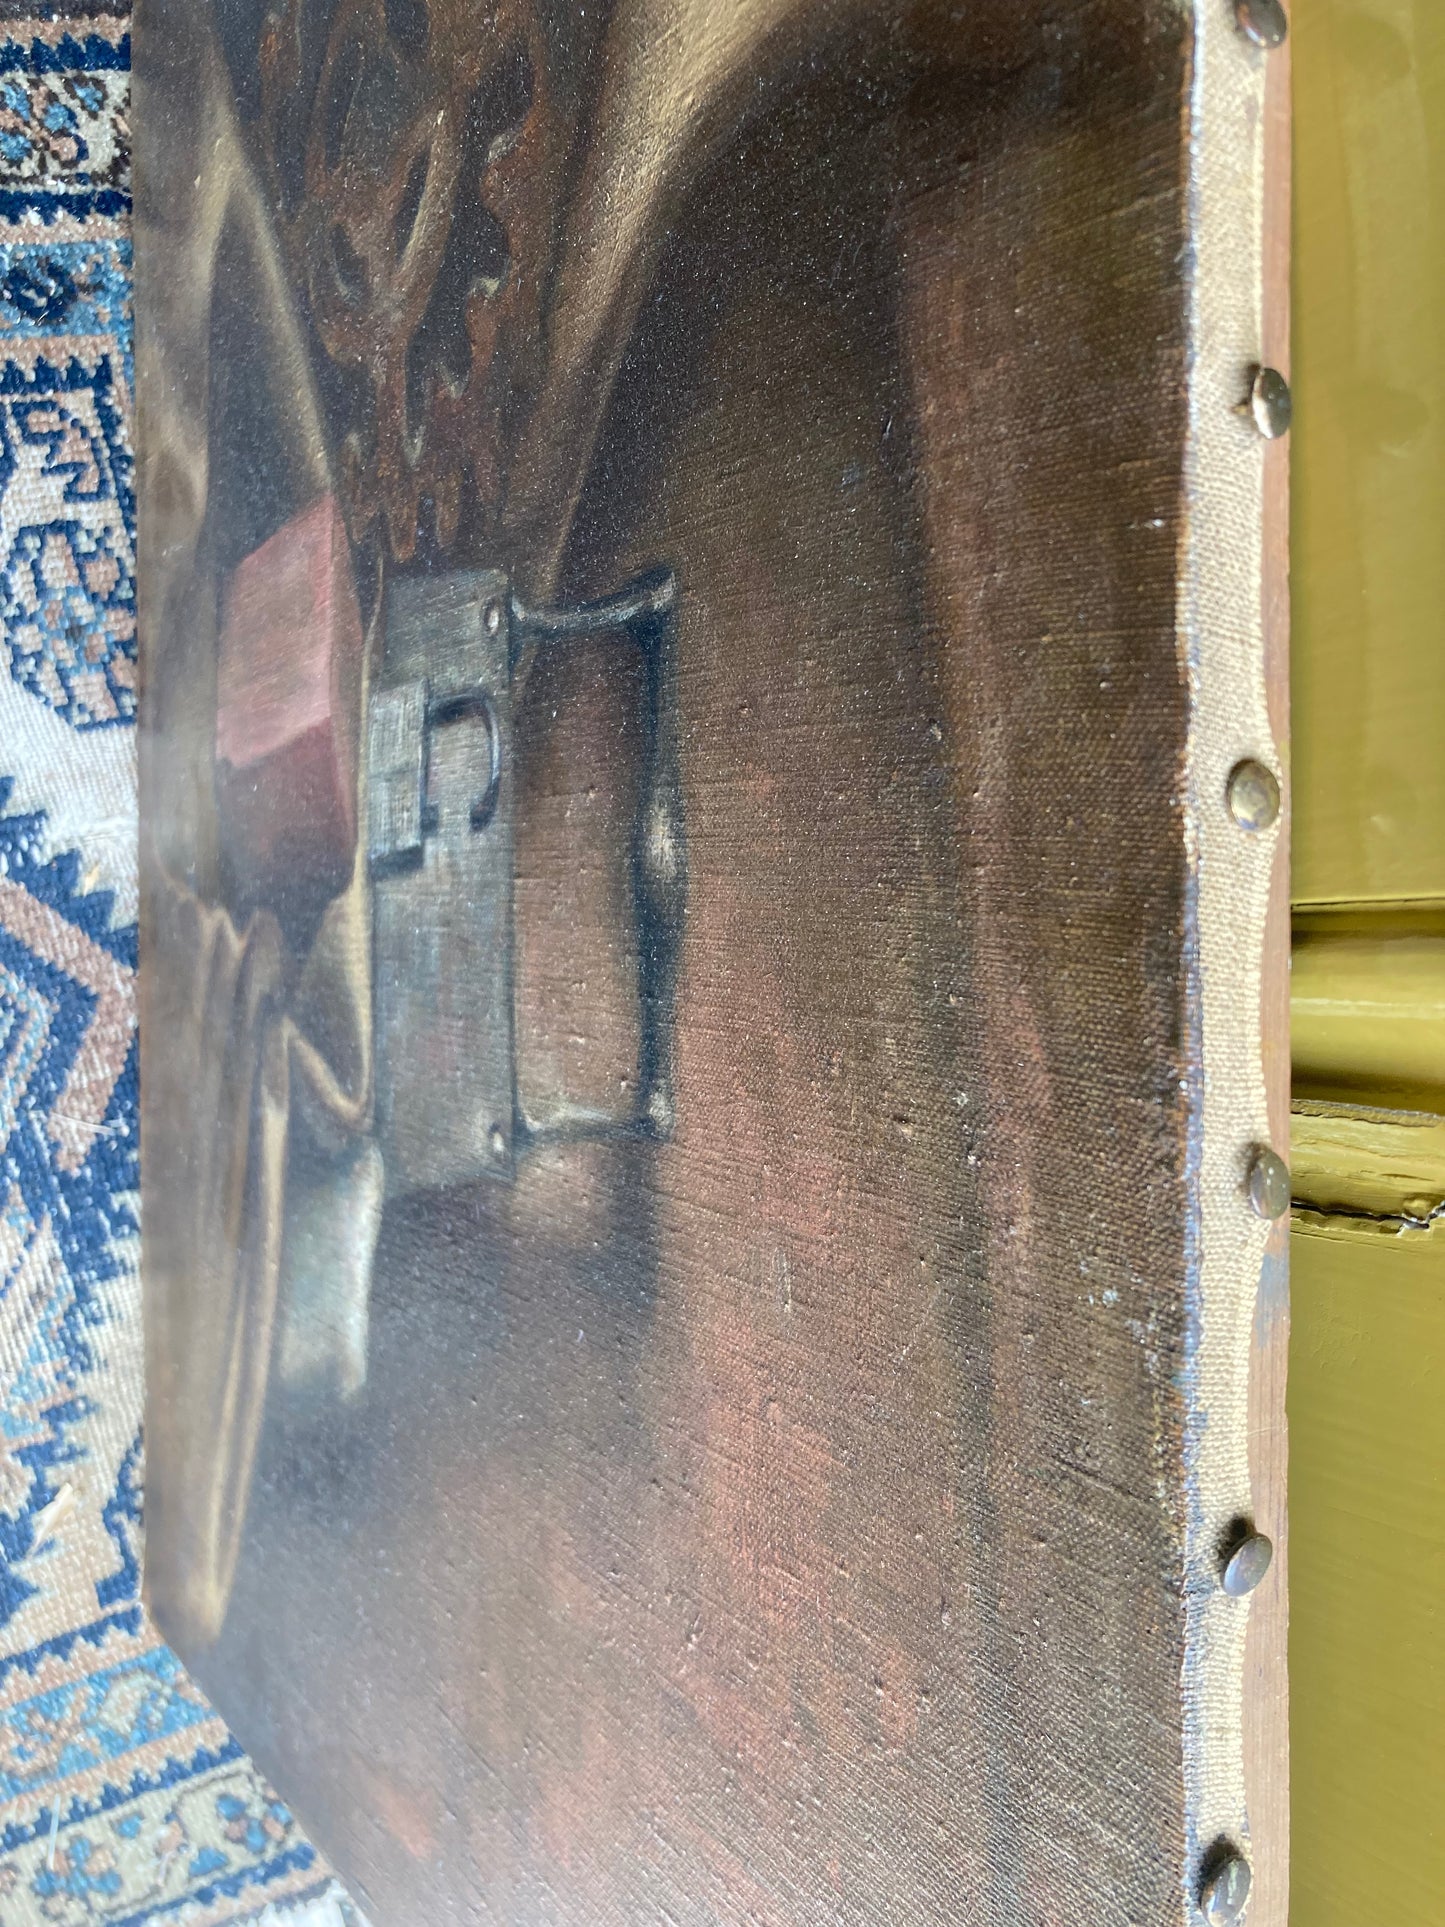 Oil on Canvas Painting, Industrial Still Life of Rusty Gear, Lock, Brick and Mandolin c. 1940 1950, artist signed N. Davis